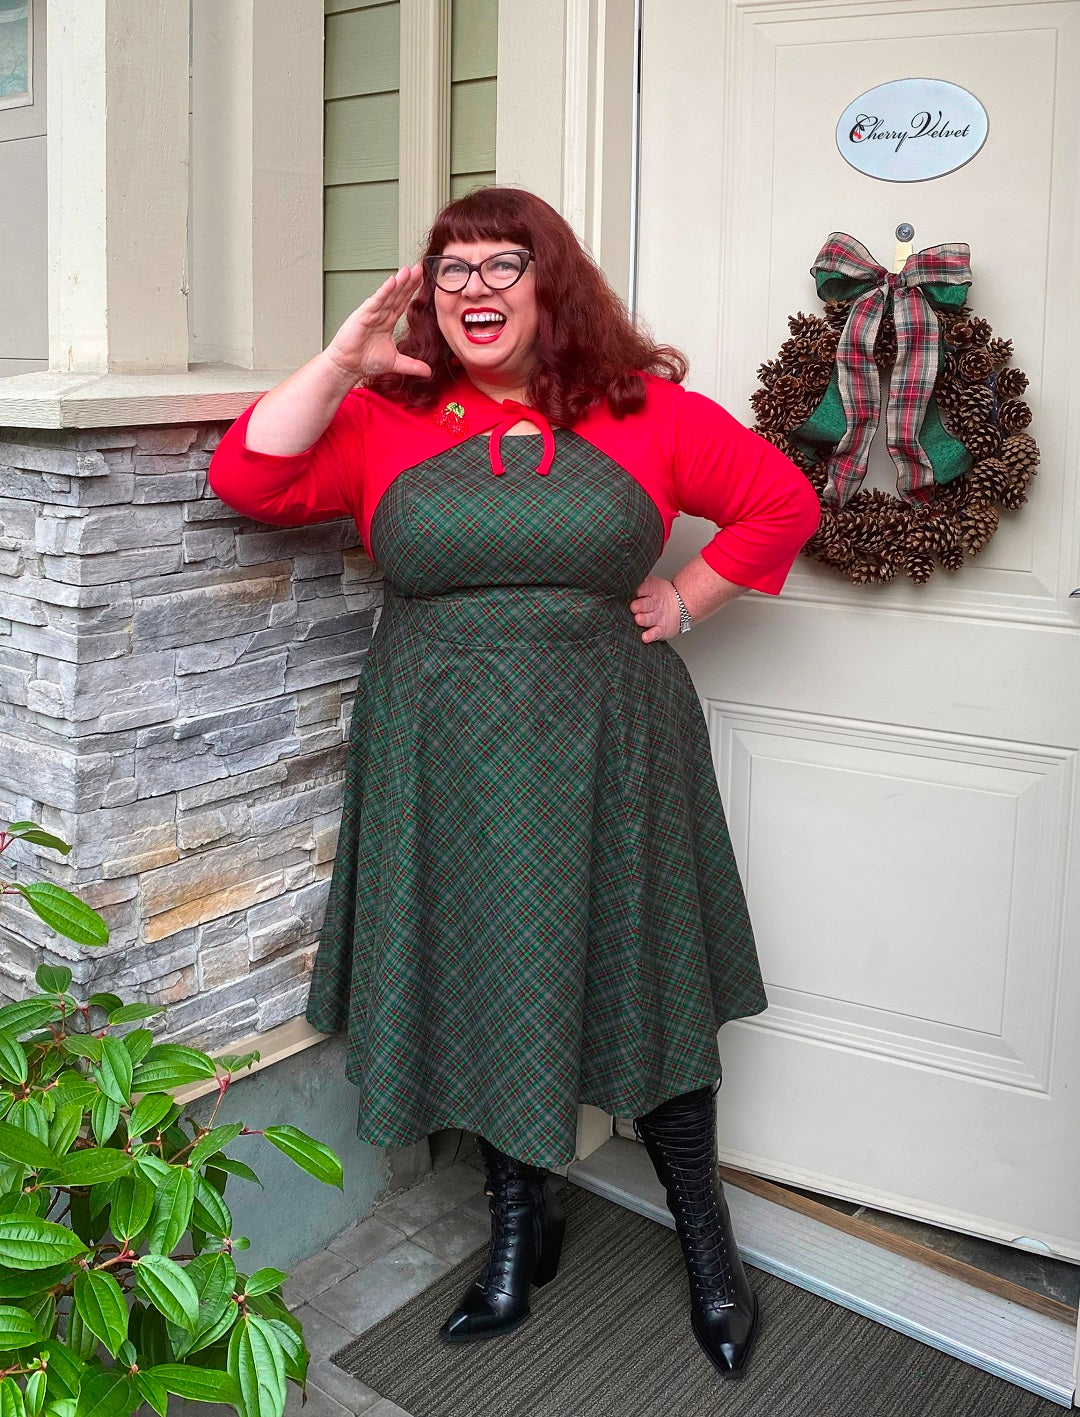 Cherry Velvet designer Diane Kennedy wearing a green plaid dress